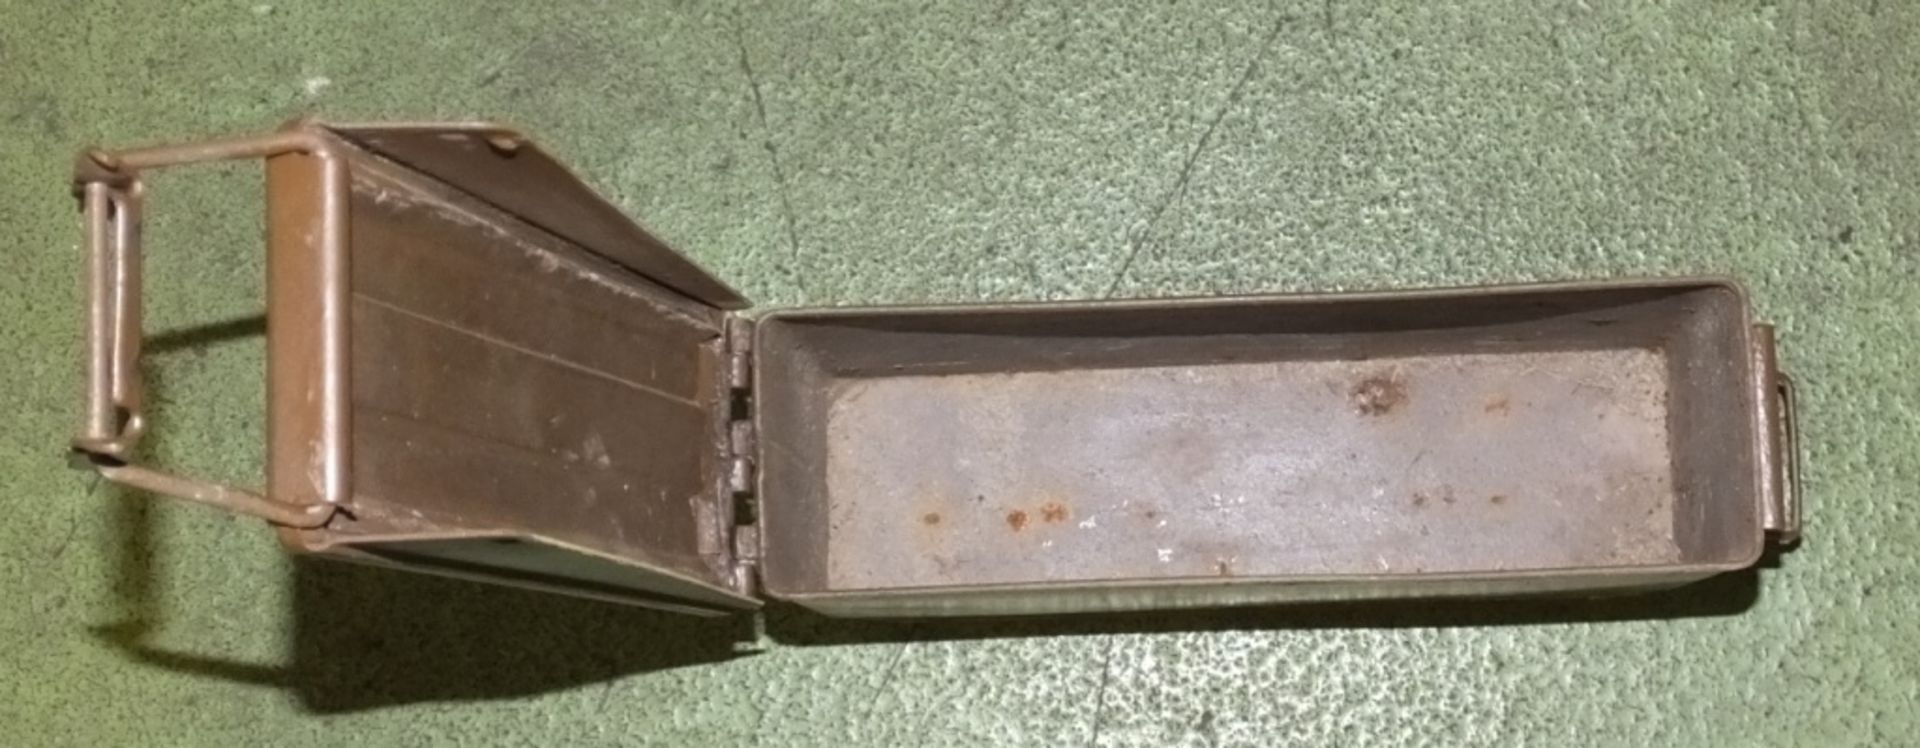 4x Ammunition Boxes Refurbished H84 - Image 2 of 2